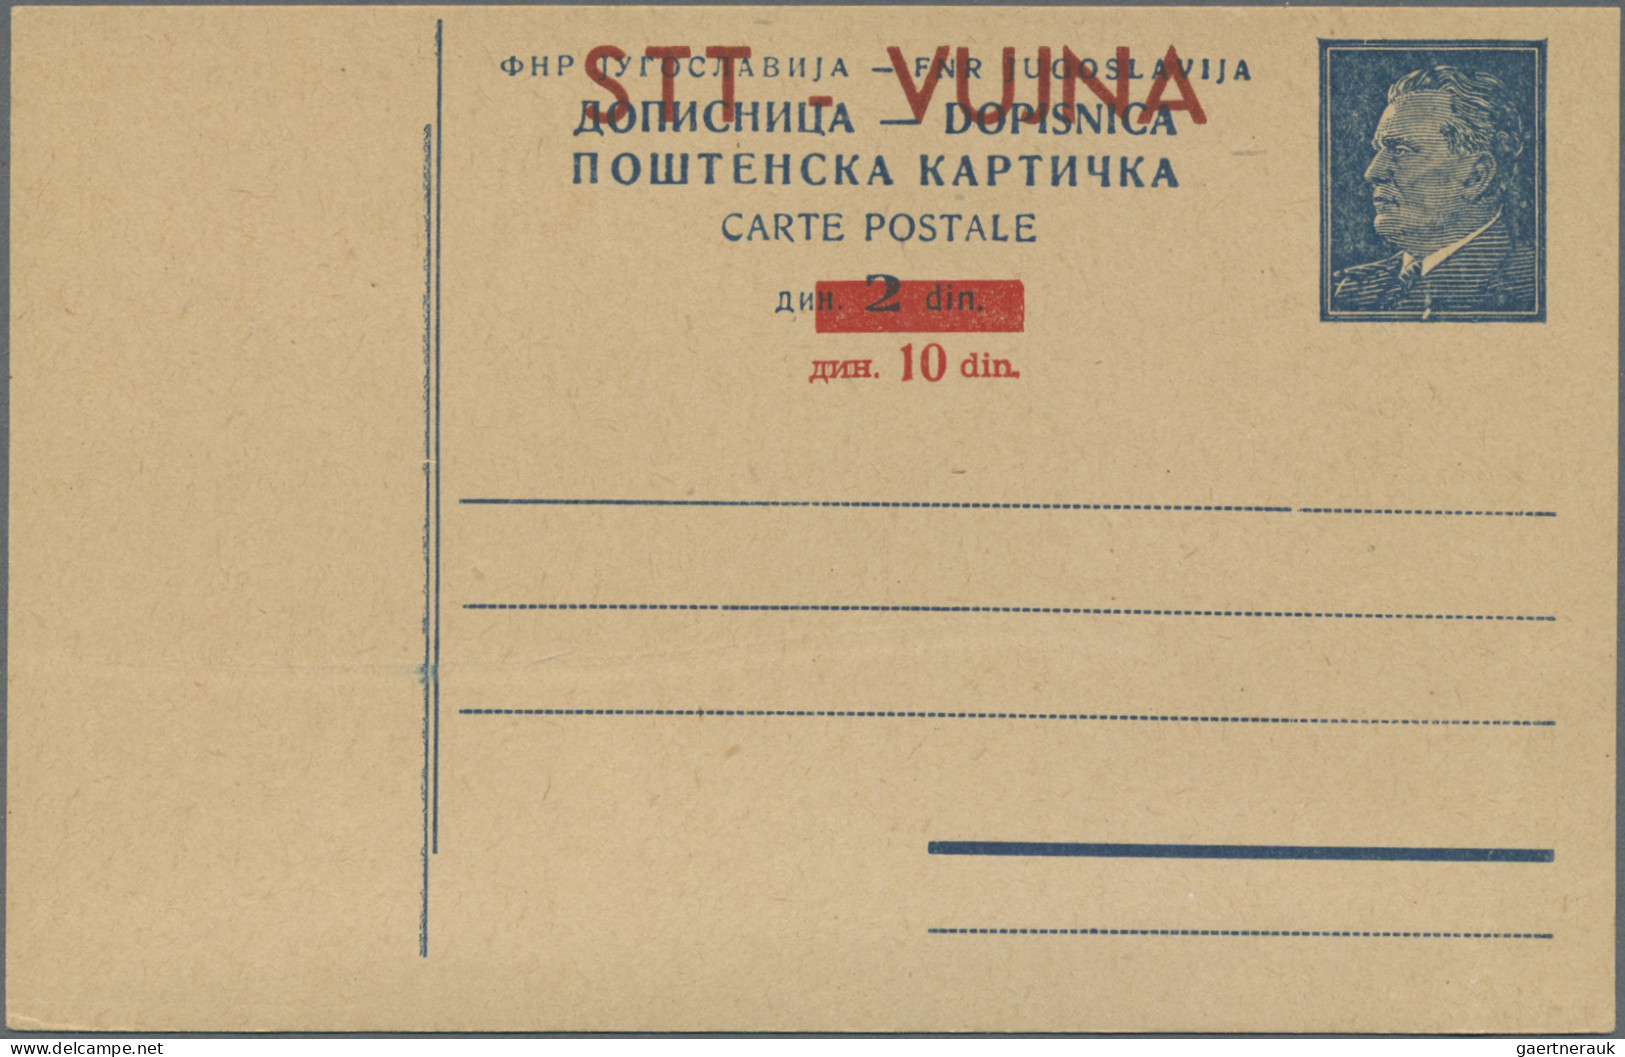 Trieste - Zone B - postal stationery: 1947/1954, lot of six postal cards and thr